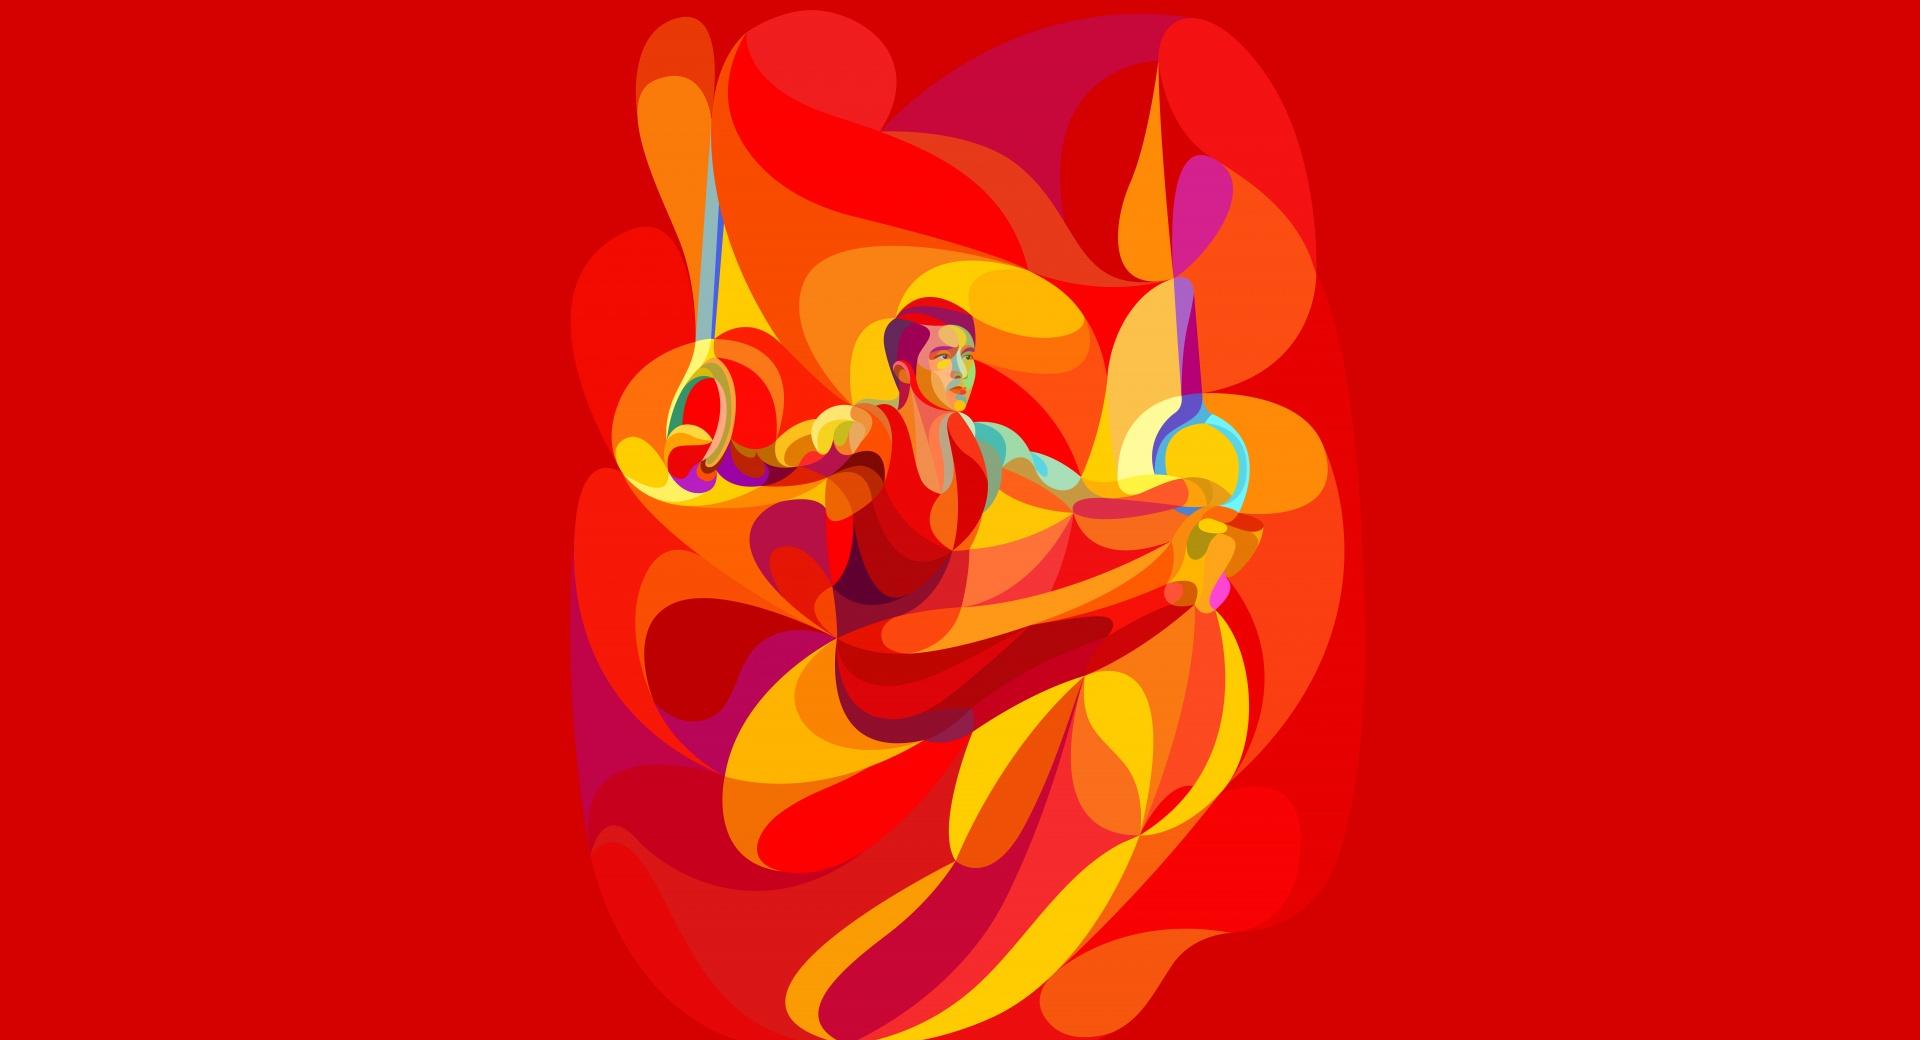 Rio 2016 Olympics Gymnastics at 1024 x 1024 iPad size wallpapers HD quality